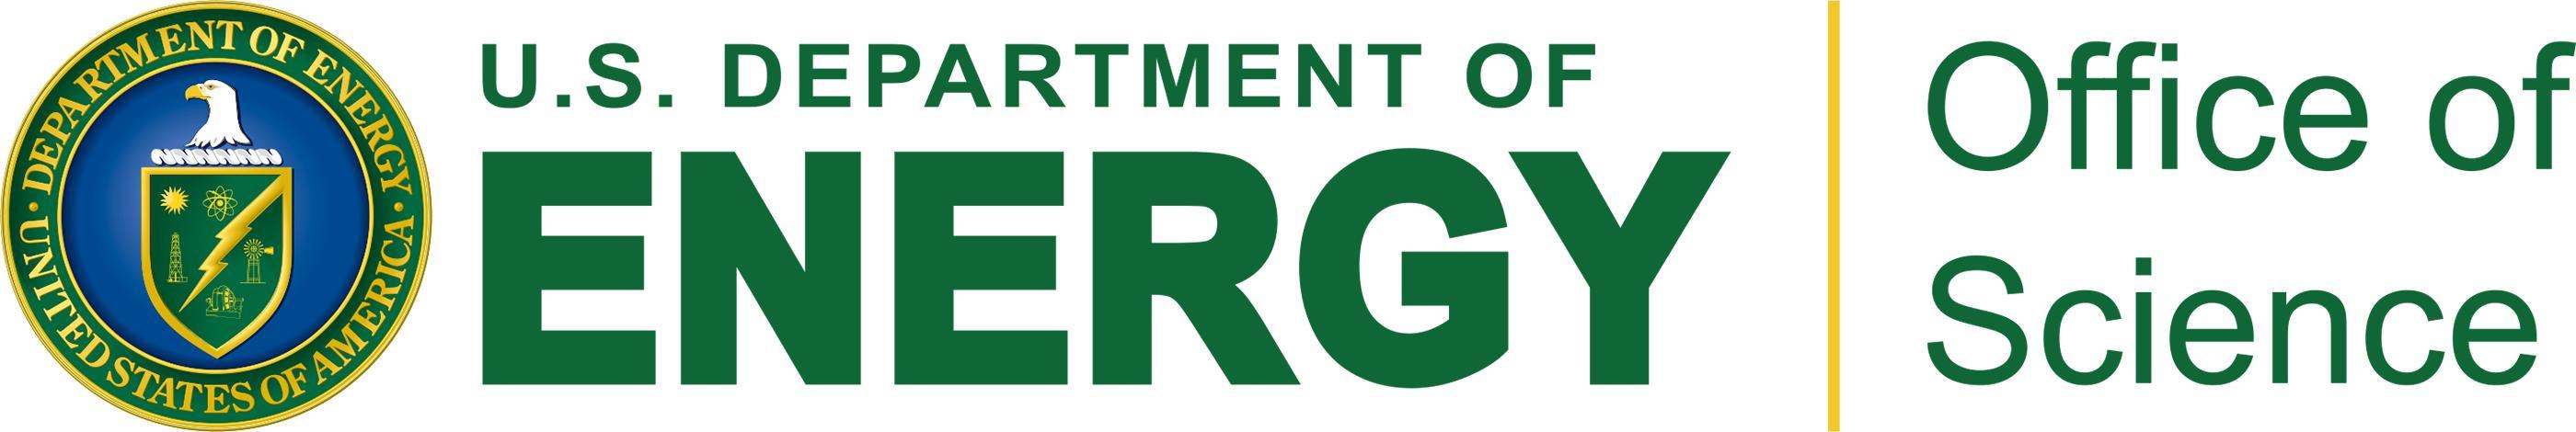 Department of Energy Logo - SC Logos | U.S. DOE Office of Science (SC)